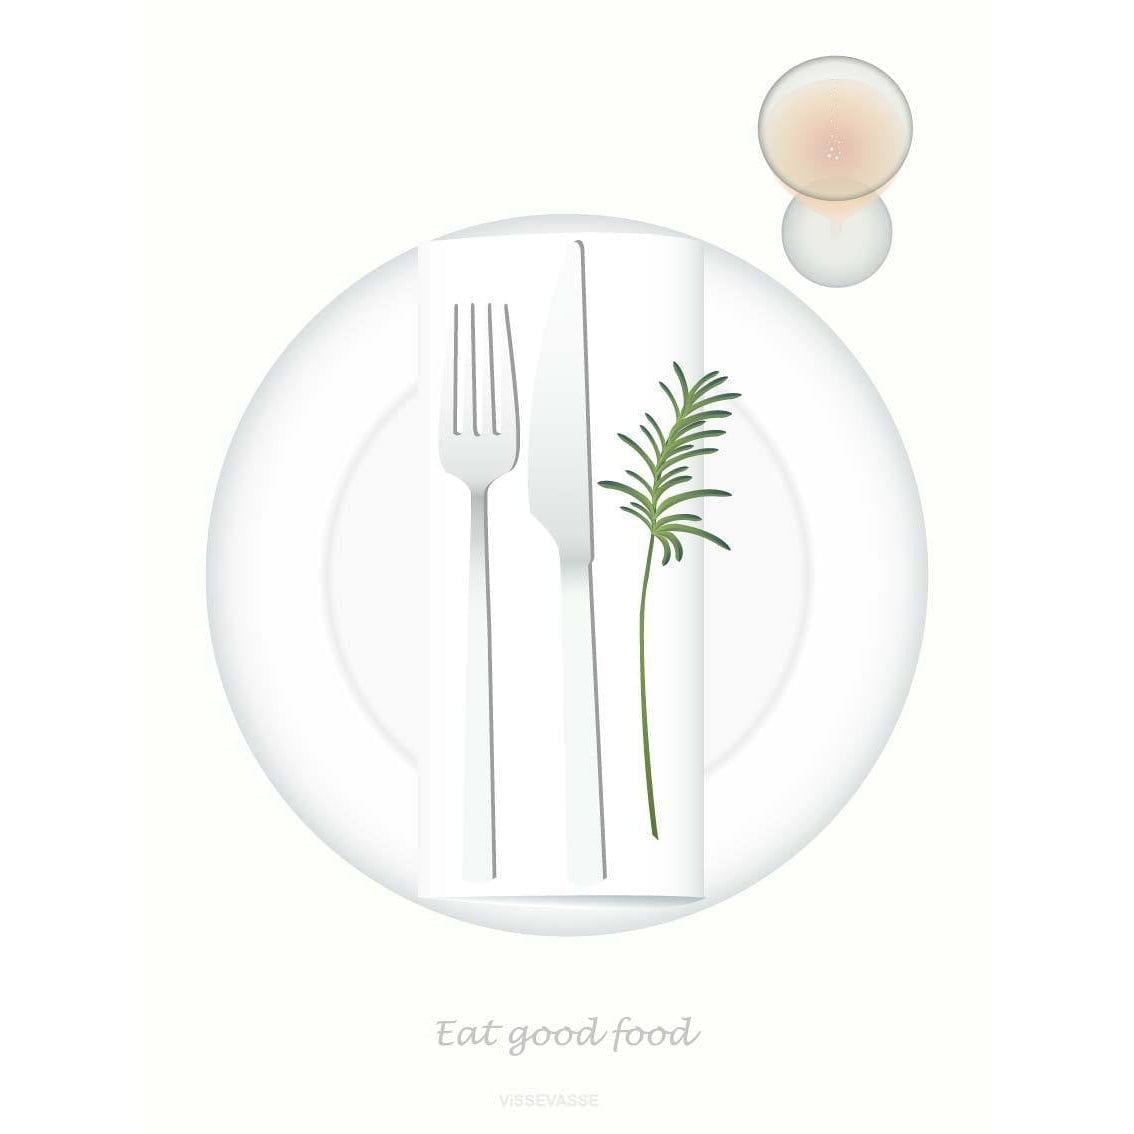 Vissevasse Eat Good Food Greeting Card, 10,5x15cm